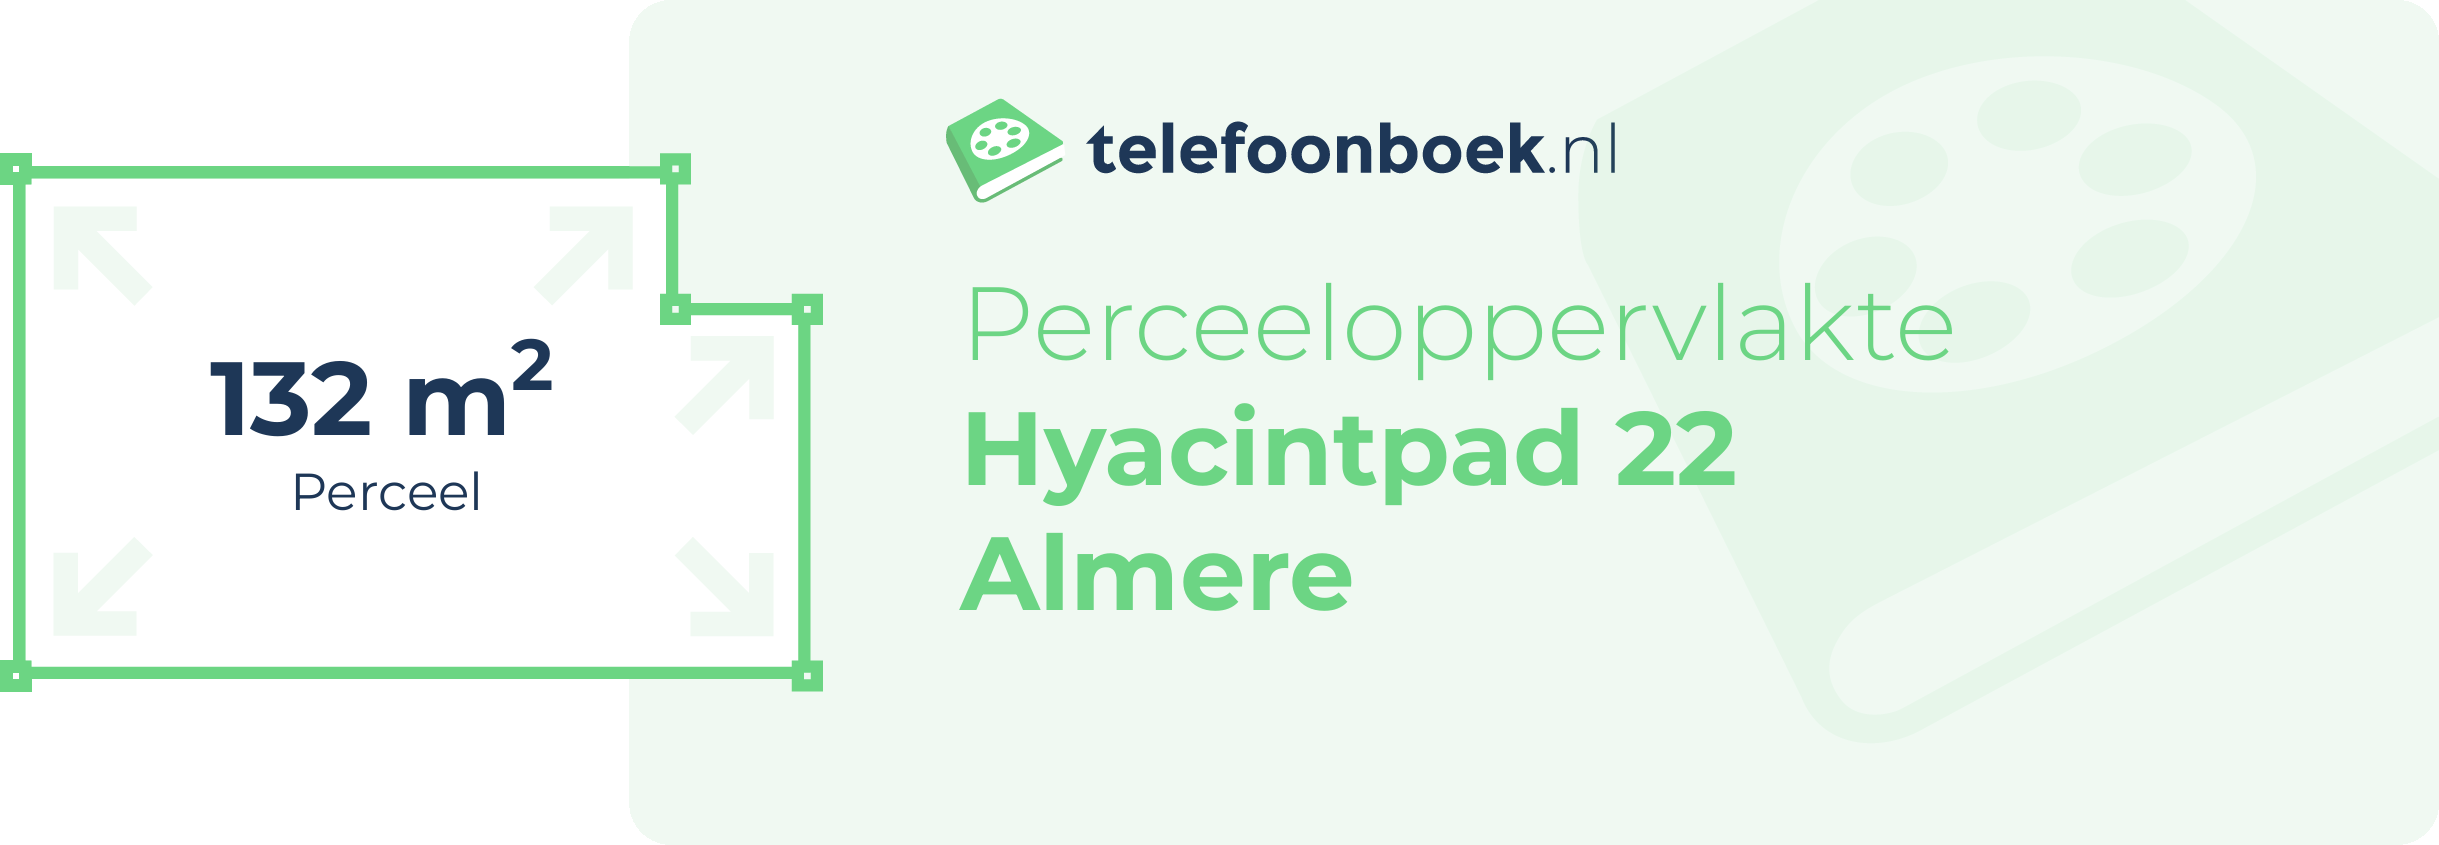 Perceeloppervlakte Hyacintpad 22 Almere